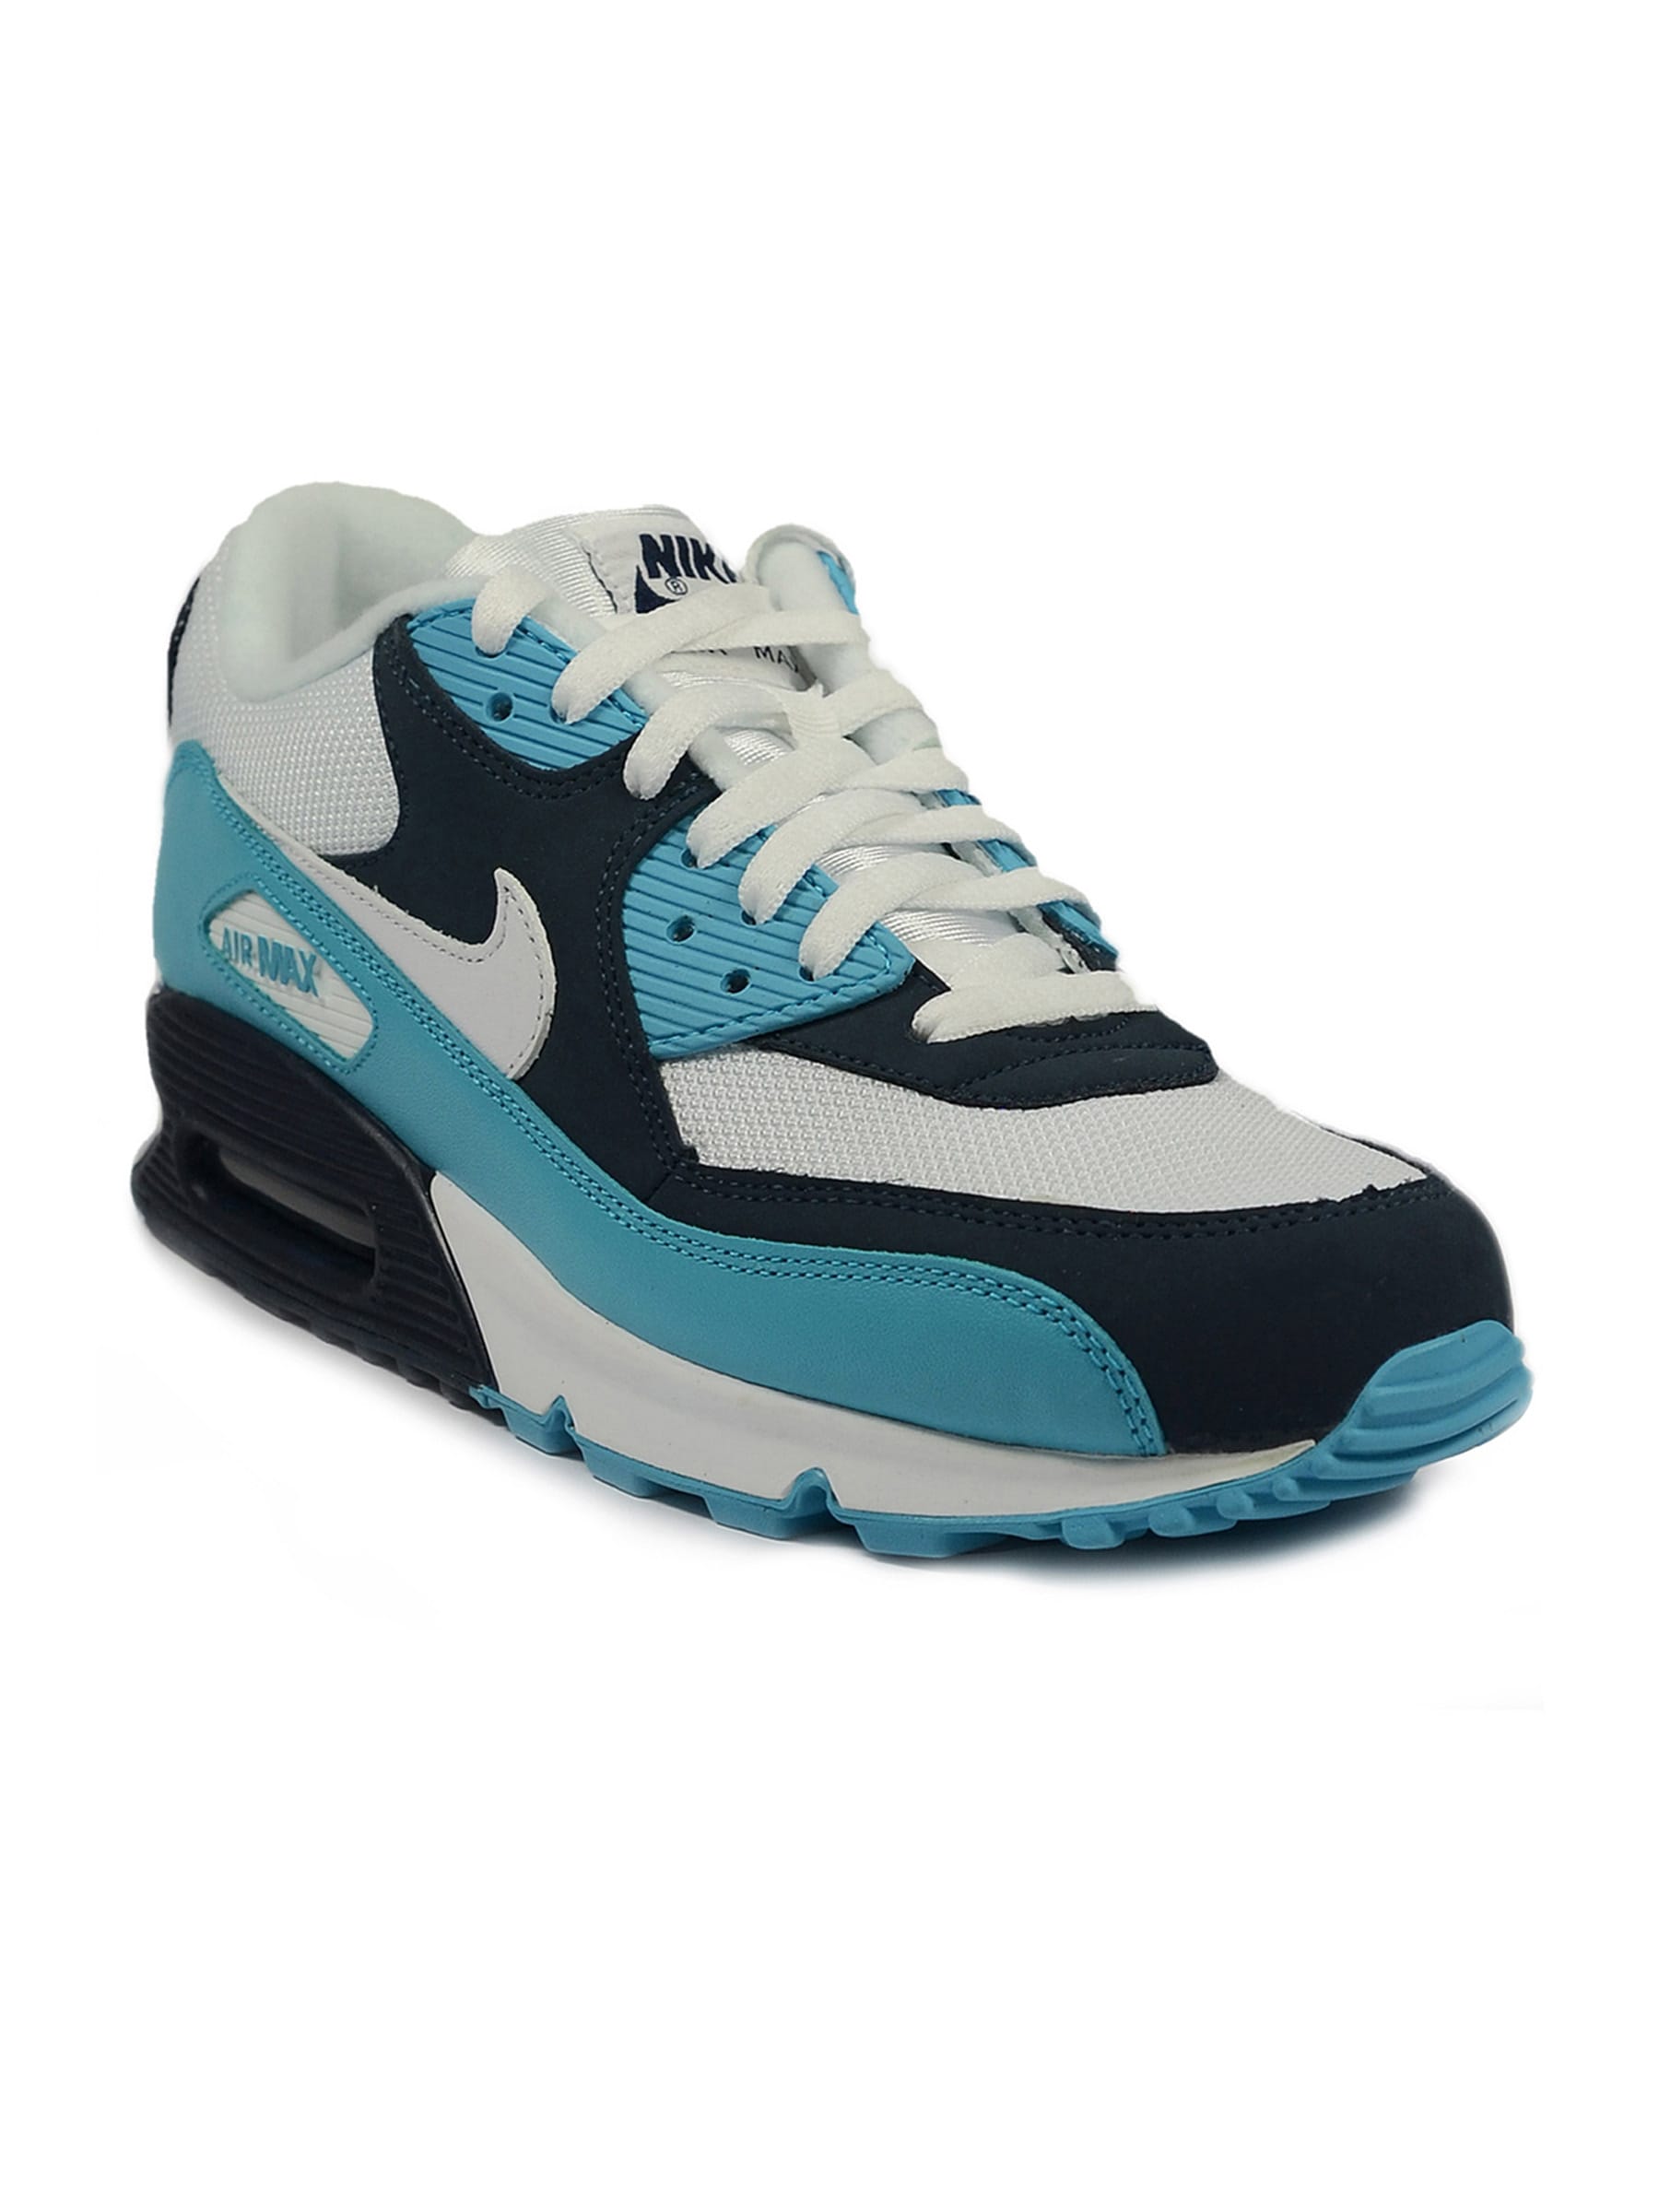 Nike Men's Air Max Blue White Shoe